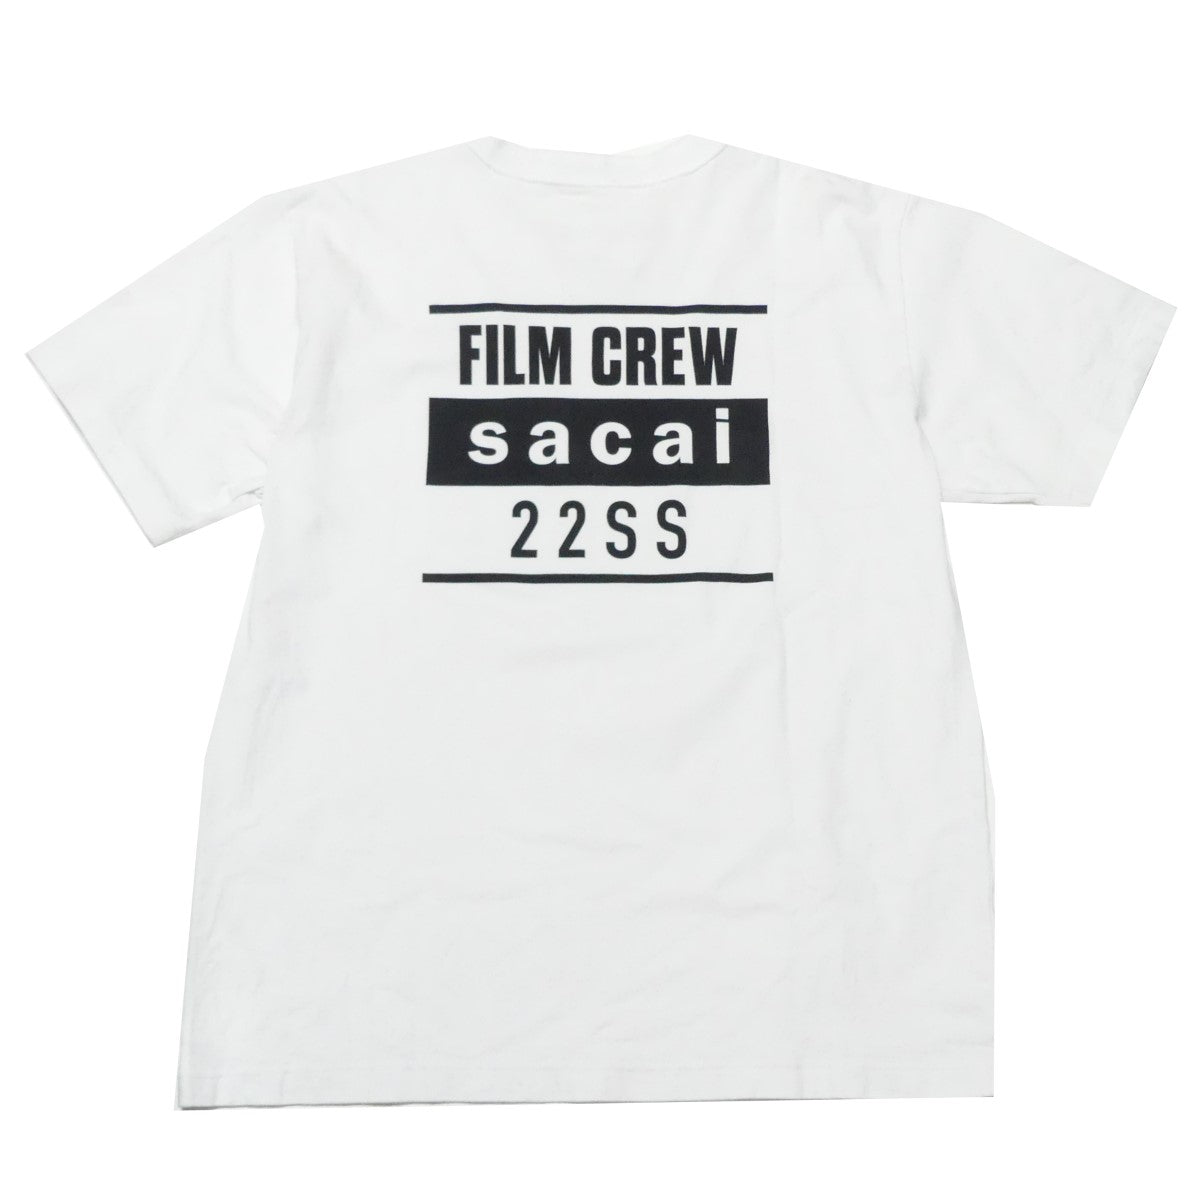 sacai(サカイ) 22SS Film Crew T-shirt バックロゴ プリント フィルム 